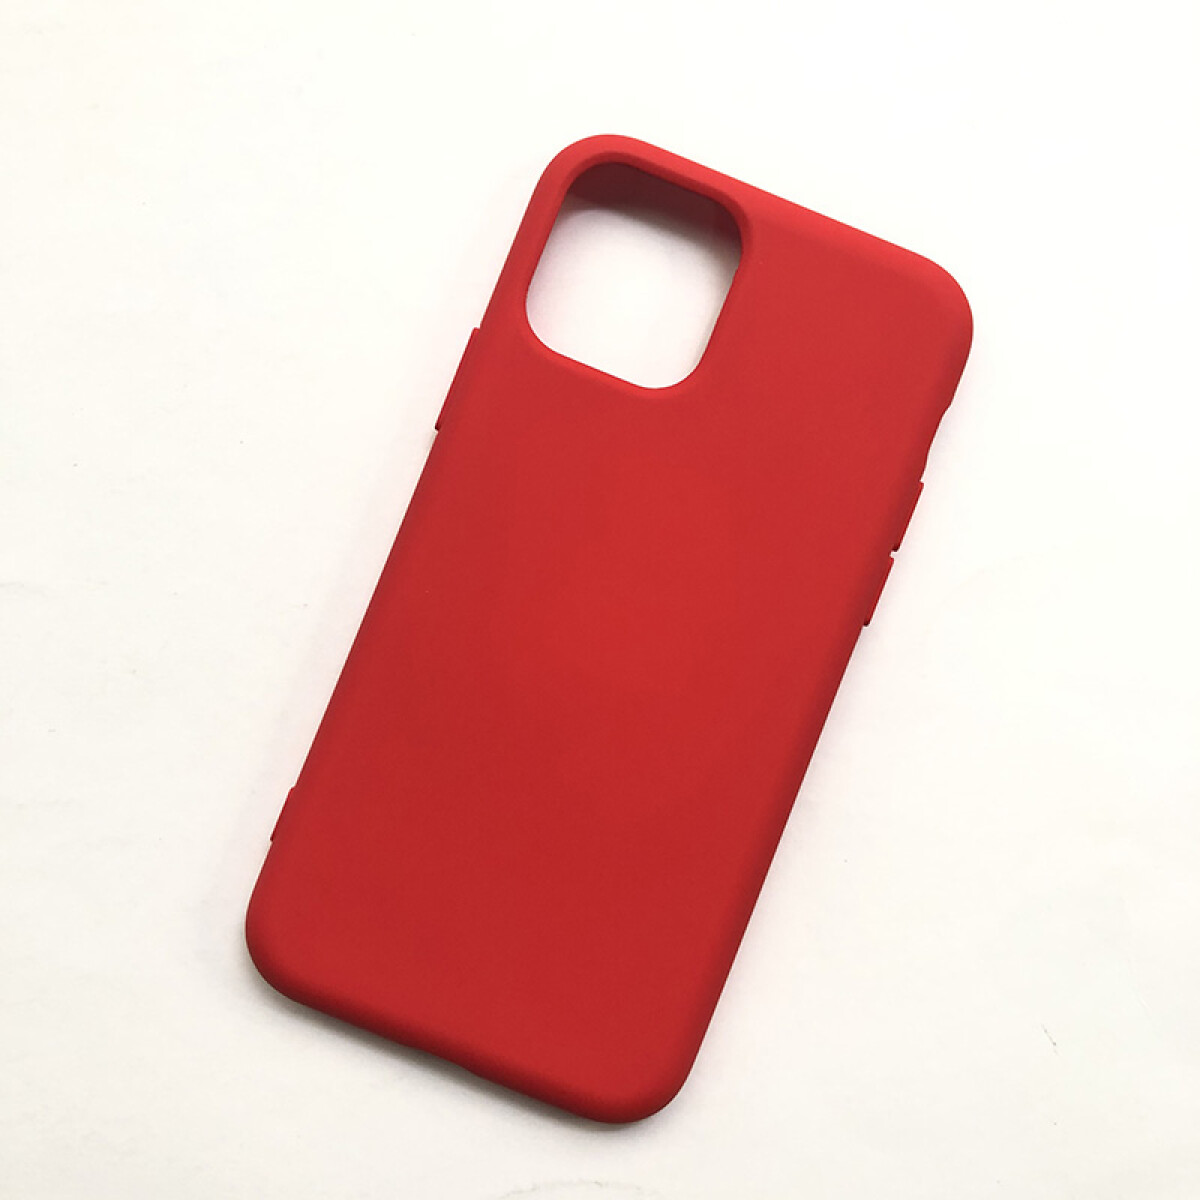 Protector de silicona para Iphone 11 Pro rojo 